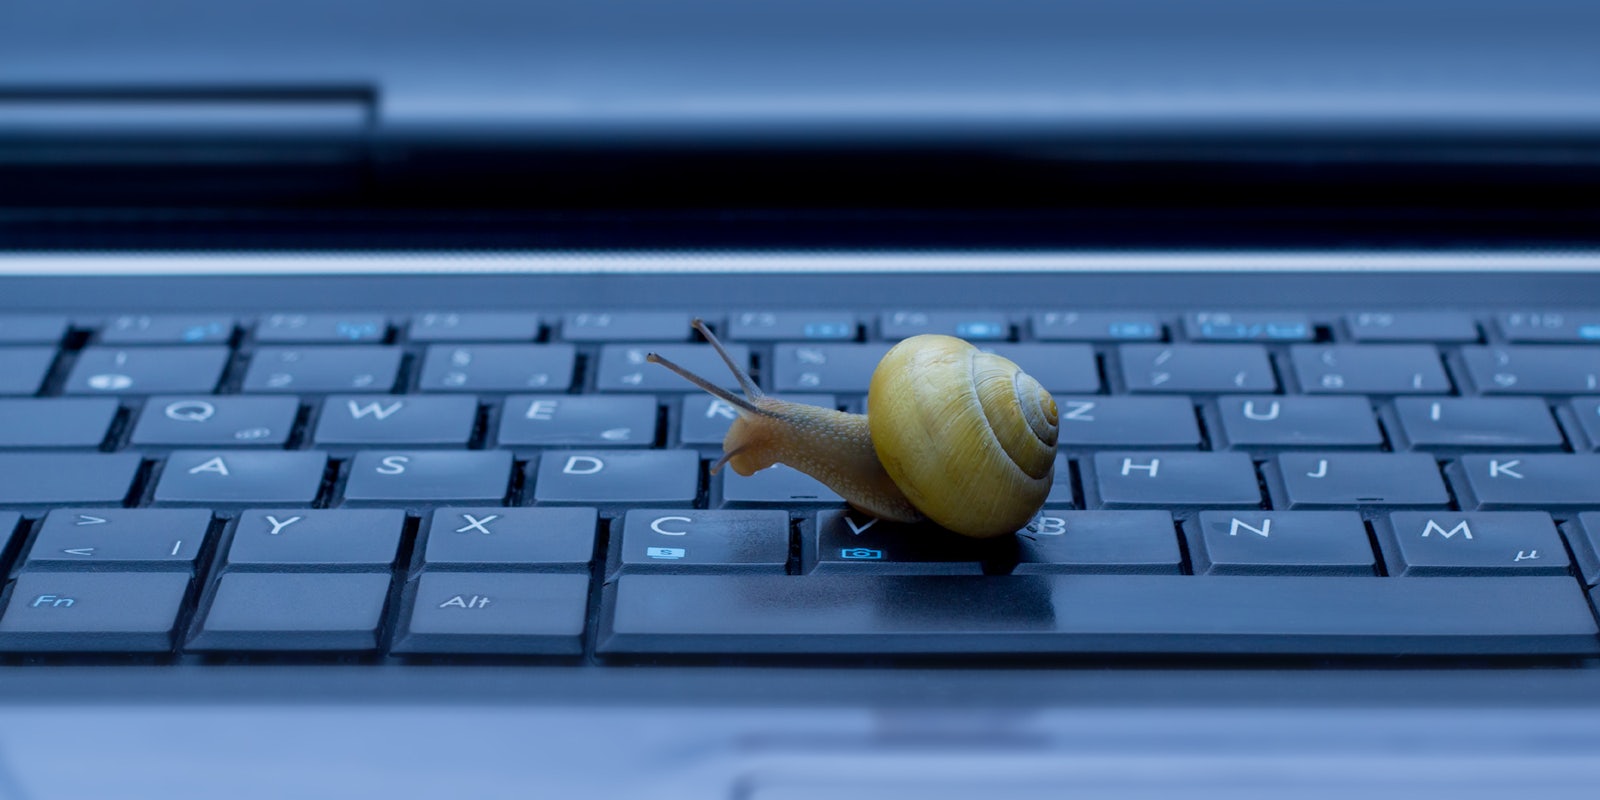 A snail on a keyboard, representing slow broadband internet speeds.